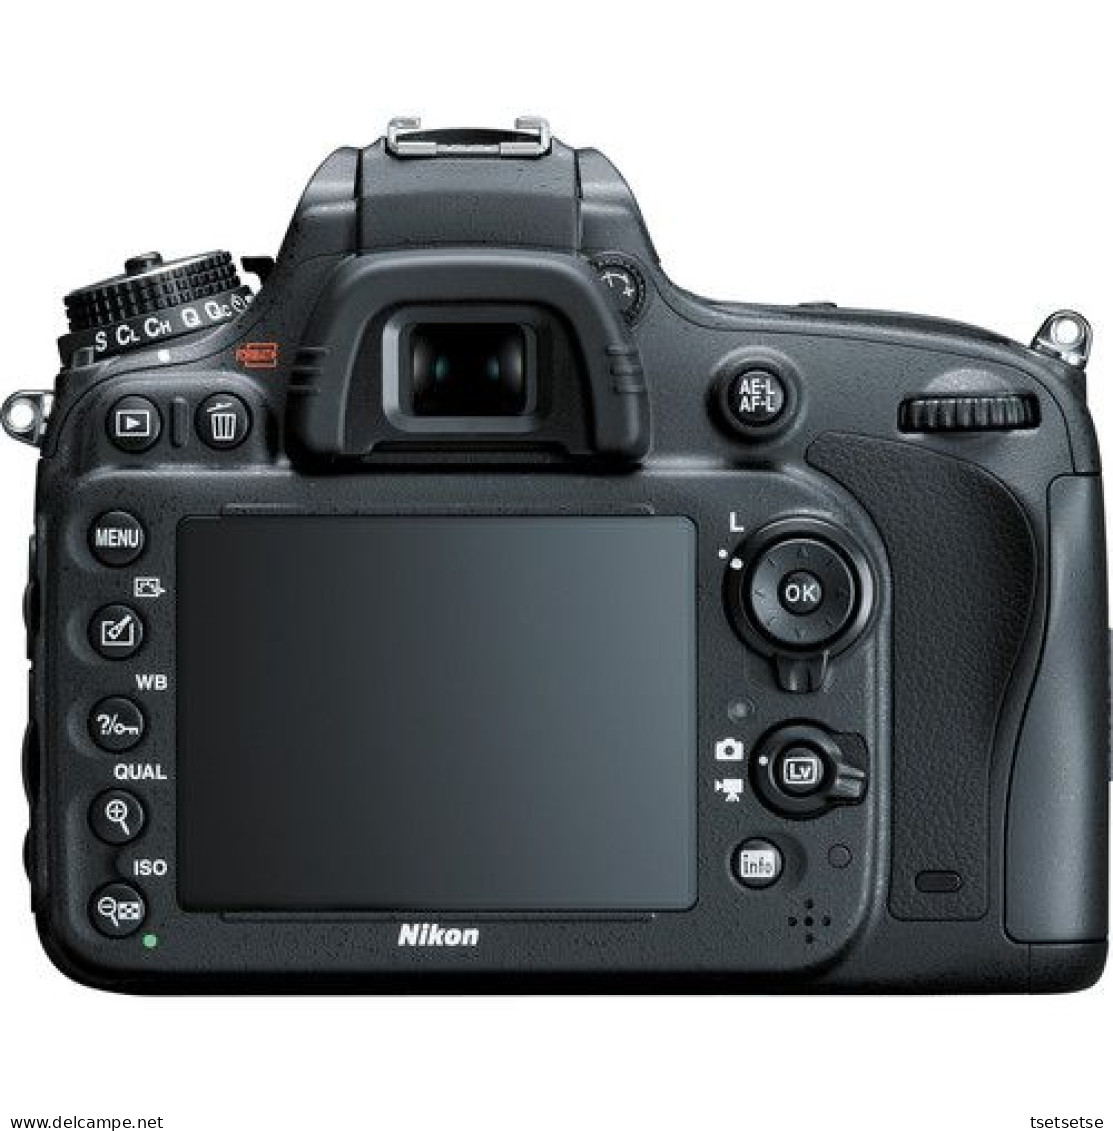 Your Choice $2,032 Or $1,099? "Brand NEW" Nikon Full-frame FX D610 DSLR Camera Kit - Appareils Photo